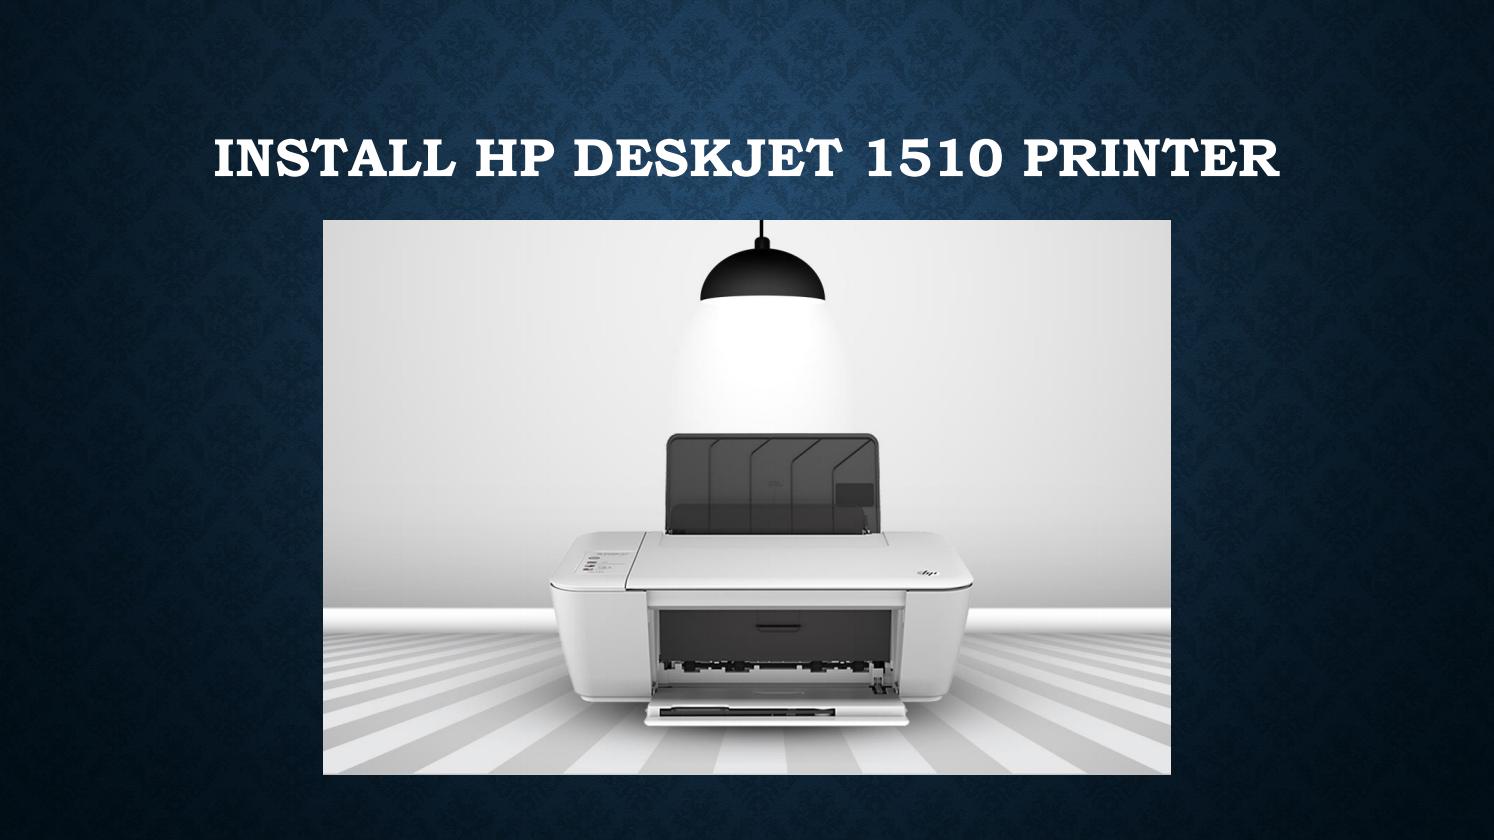 Hp printer software